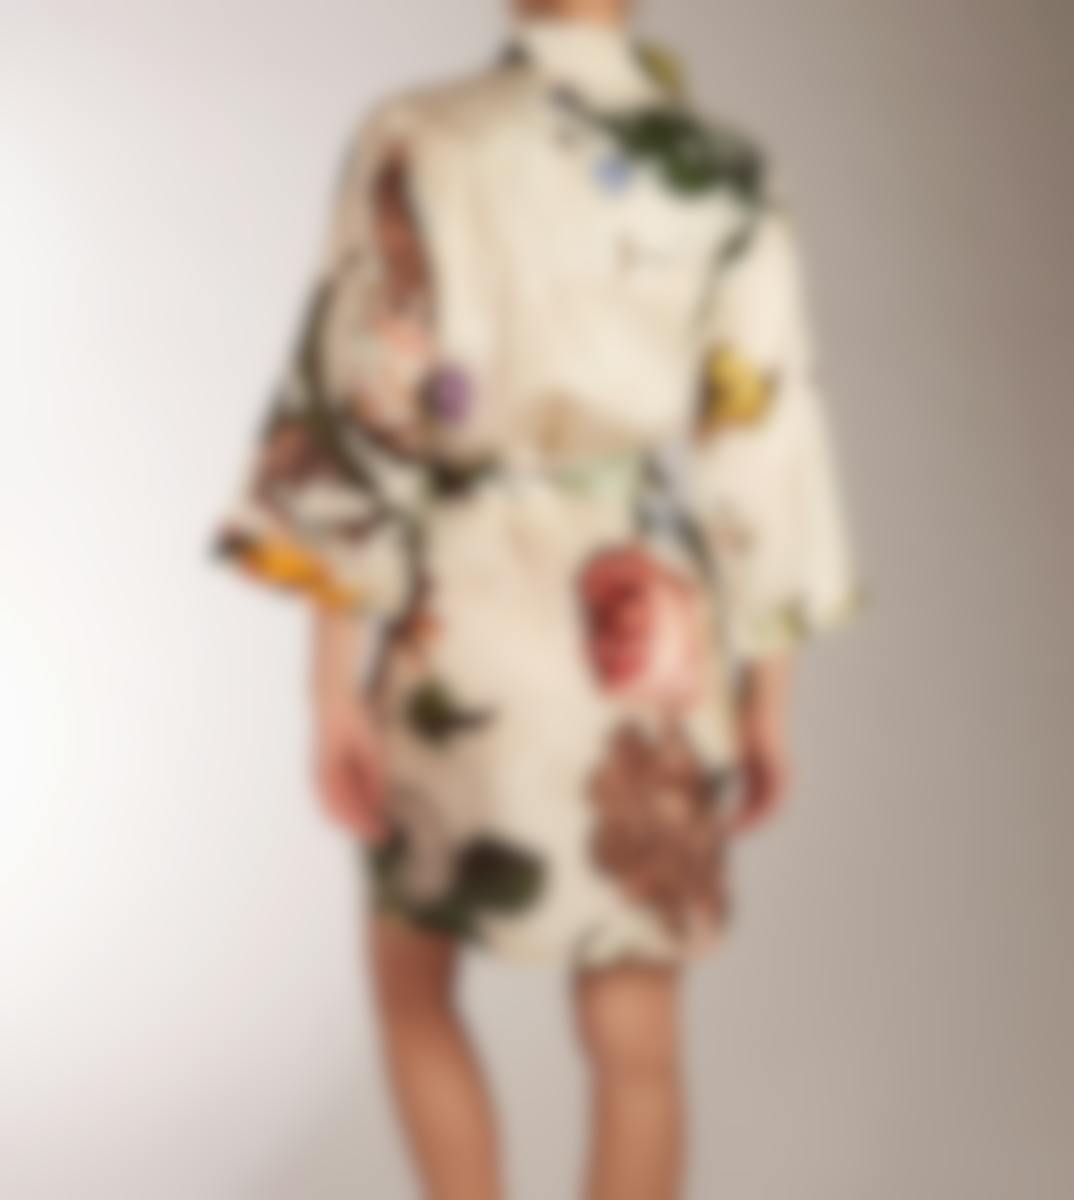 Essenza robe de chambre Fleur Kimono D